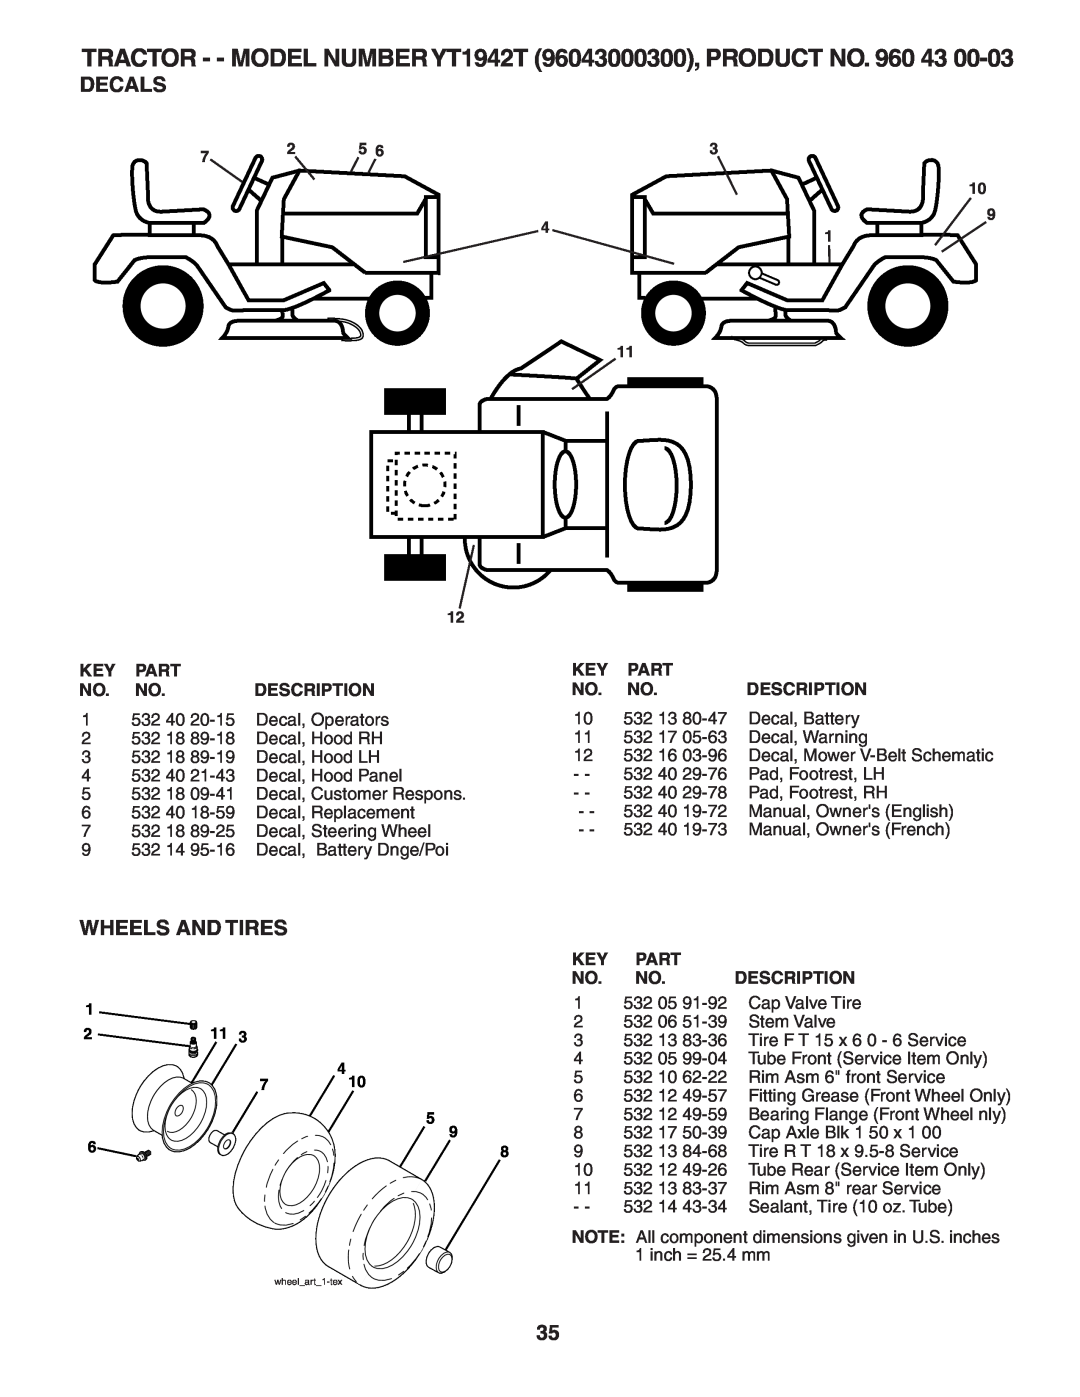 Husqvarna YT1942T owner manual Decals, Wheels And Tires, Part, Description 